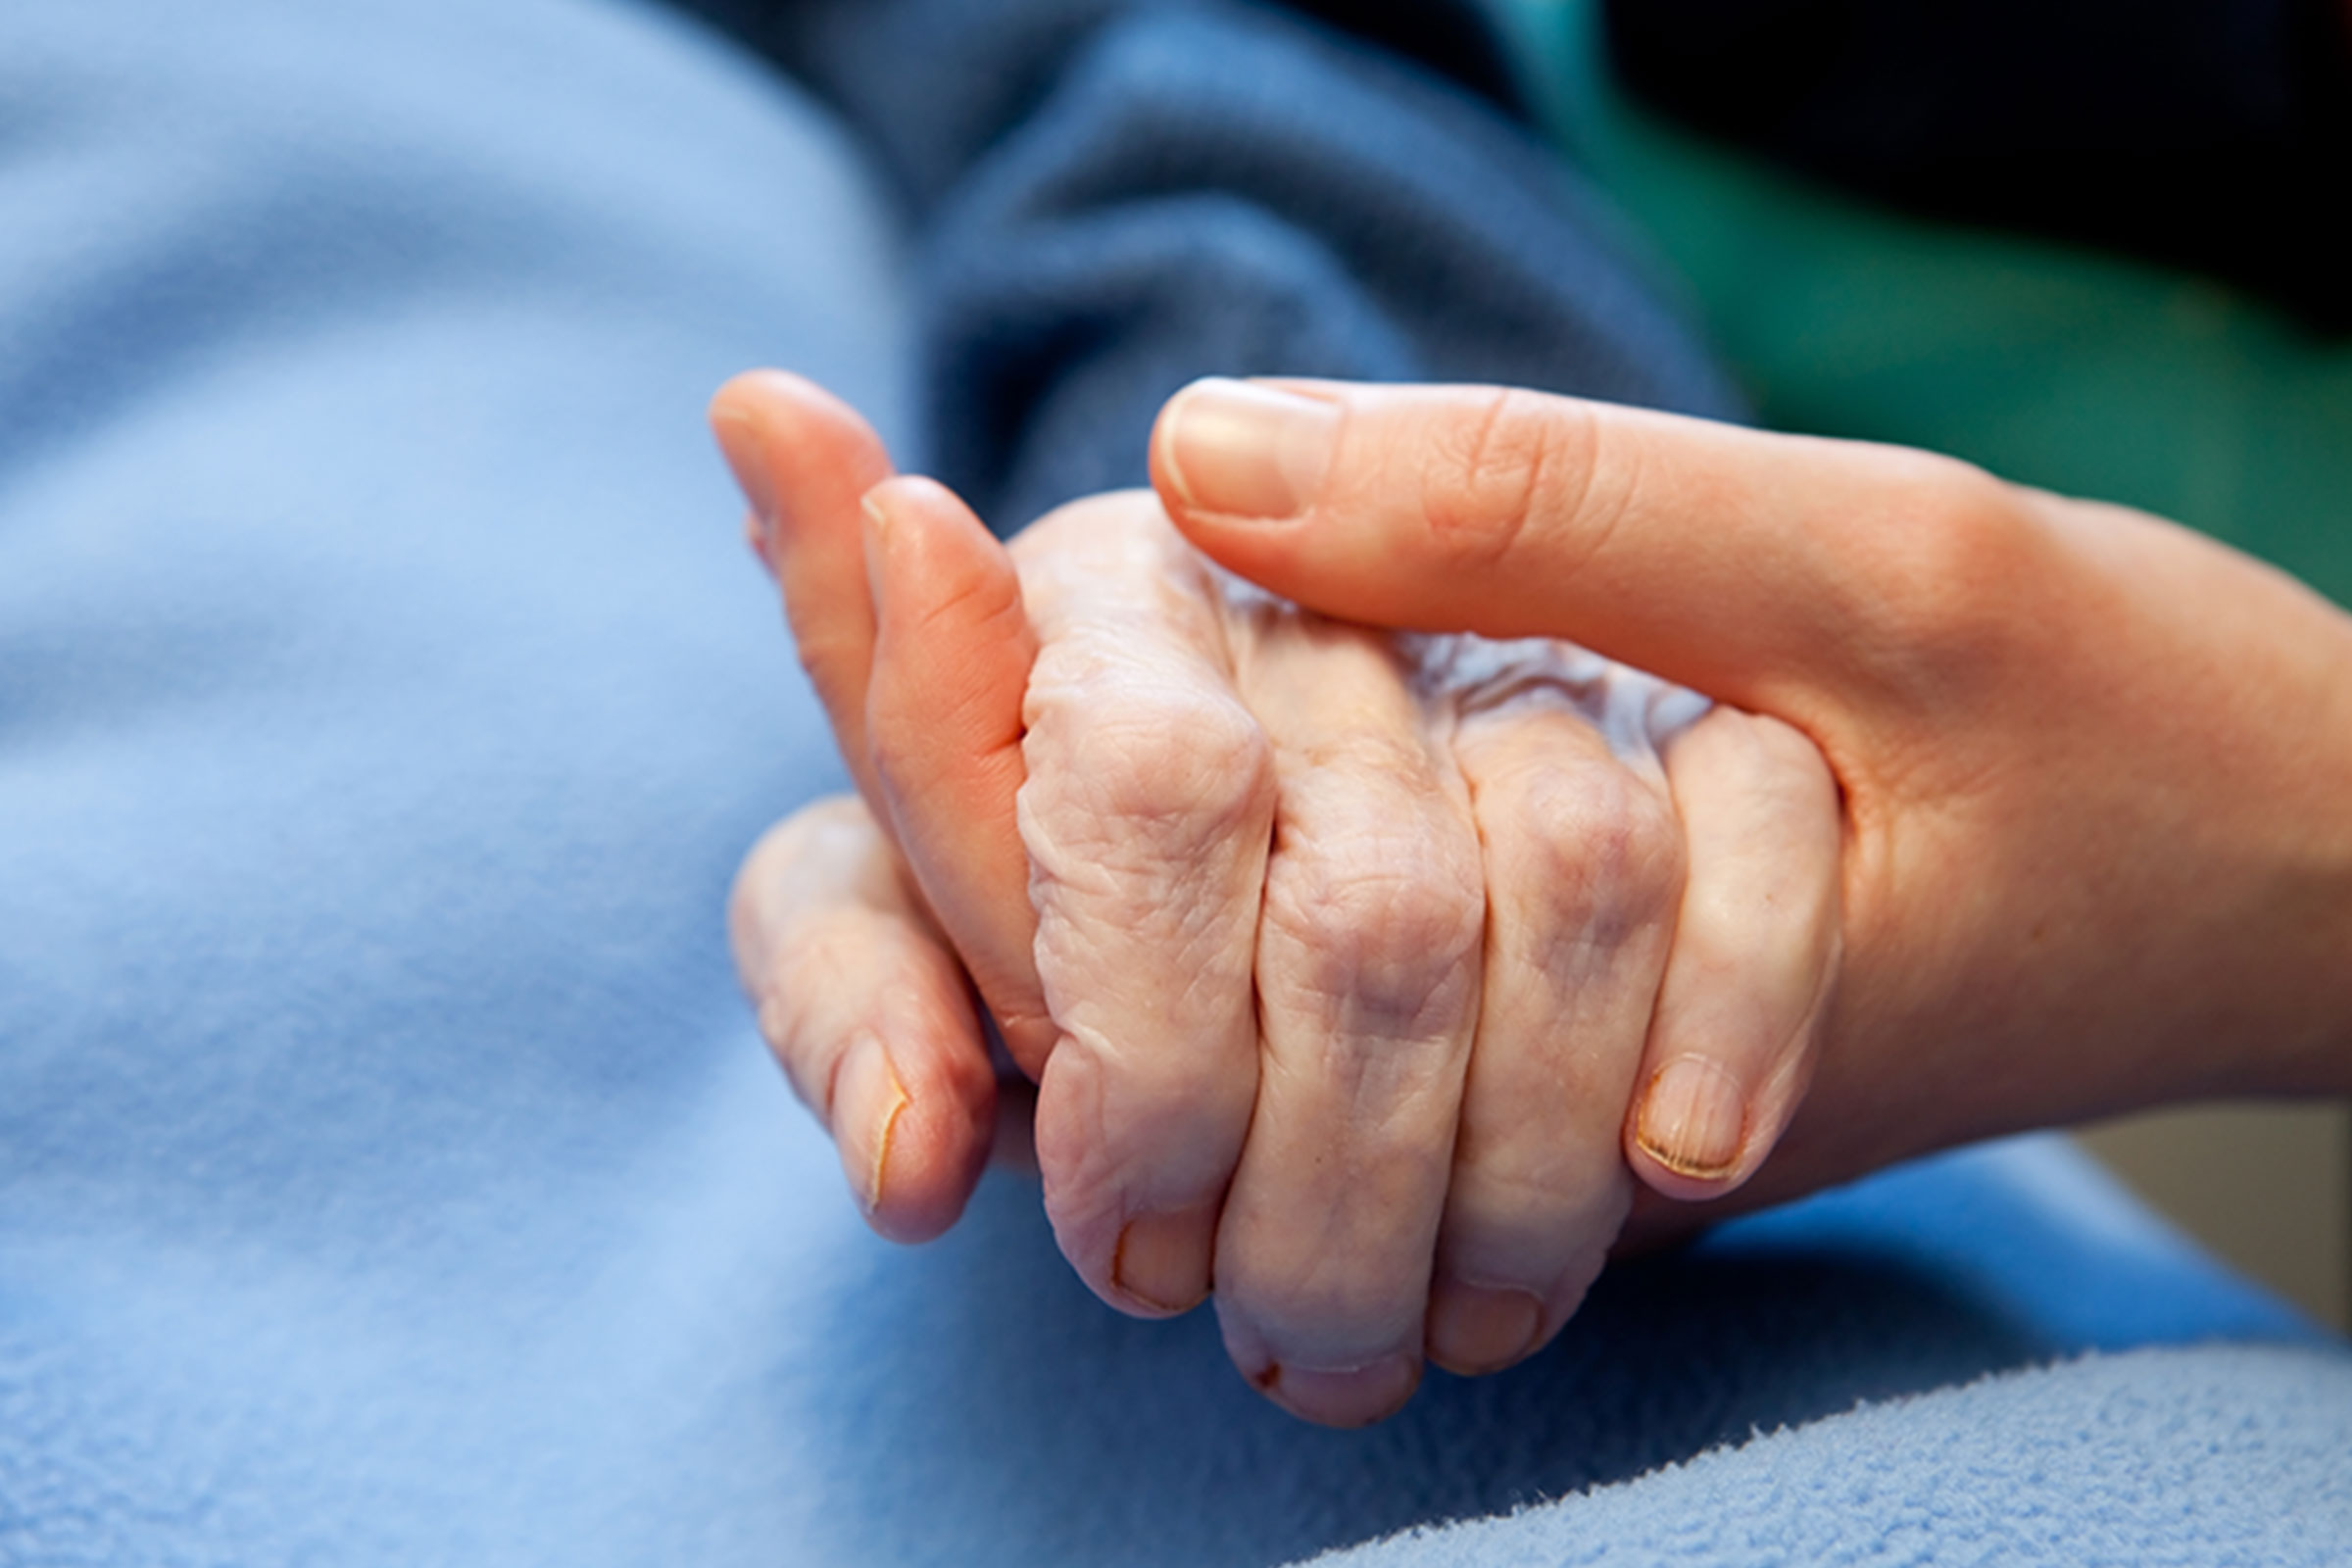 Holding elderly person's hand